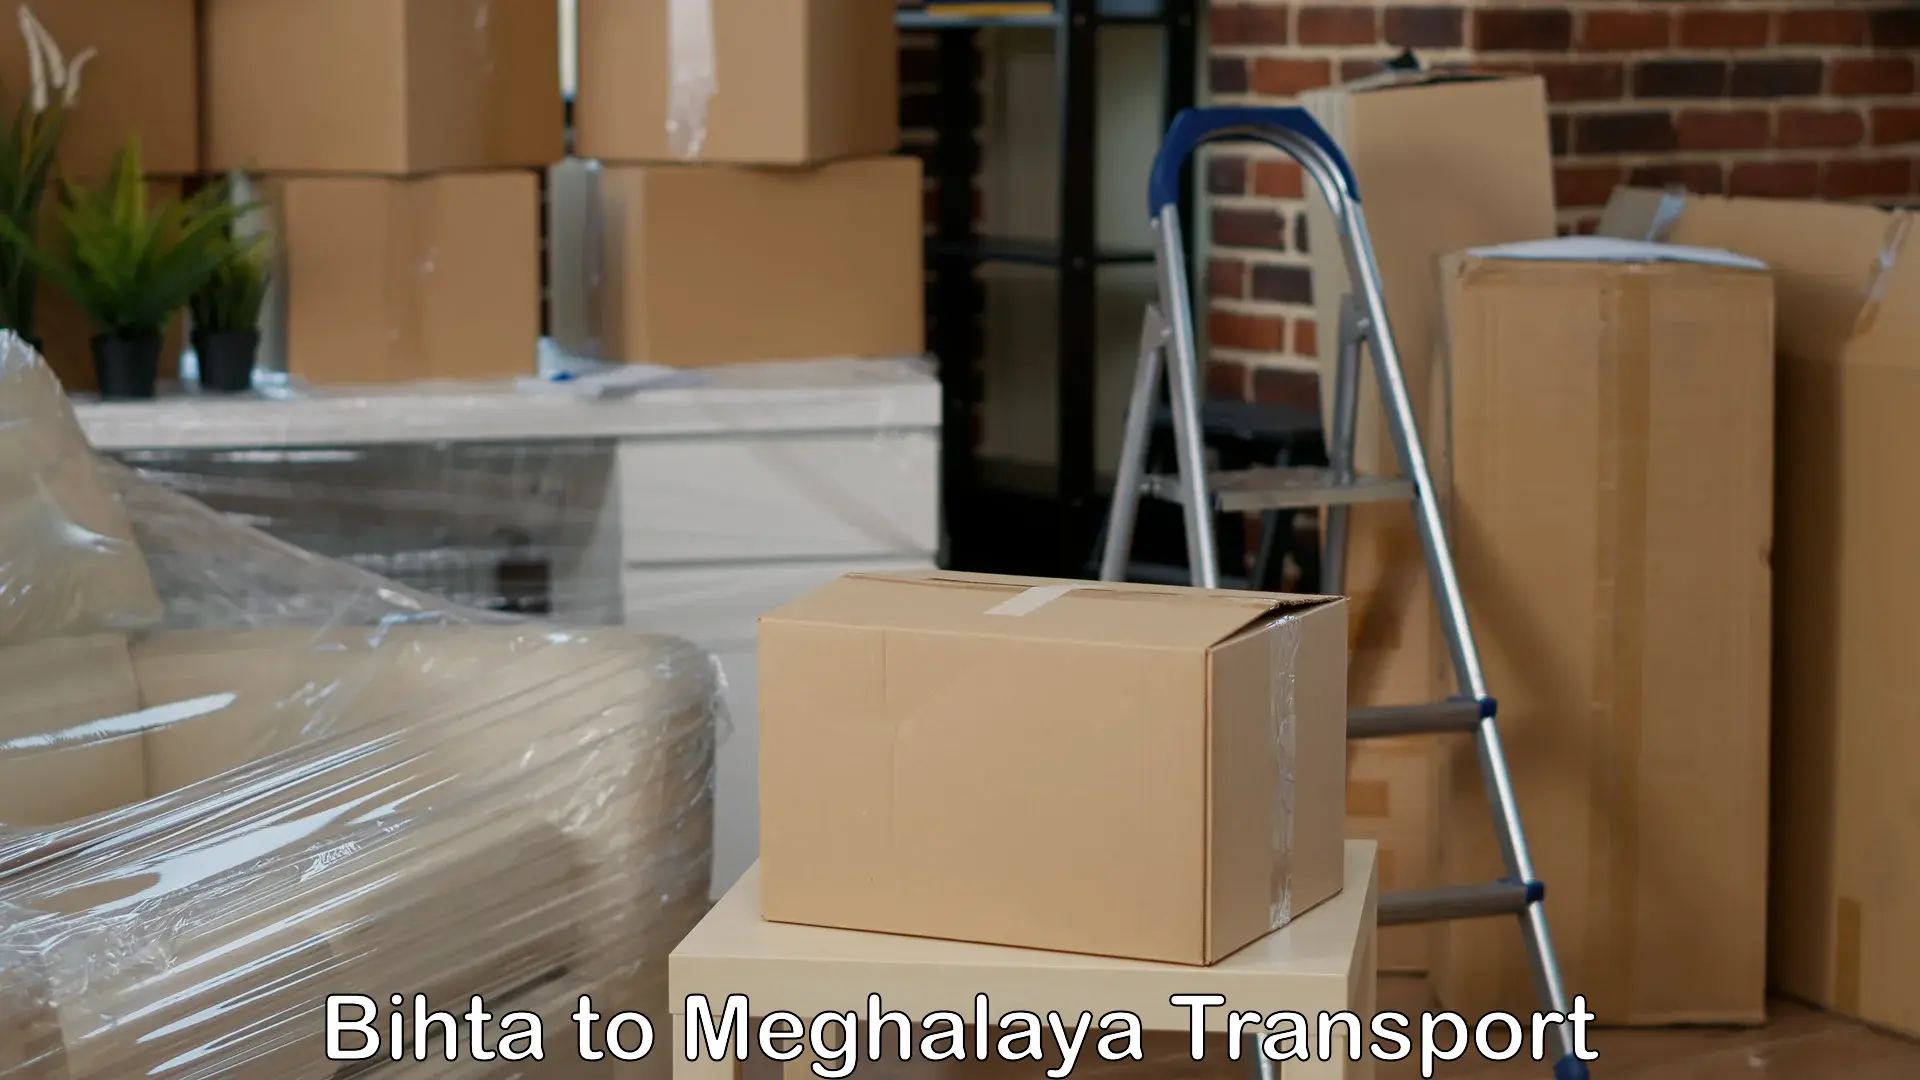 Delivery service Bihta to Meghalaya